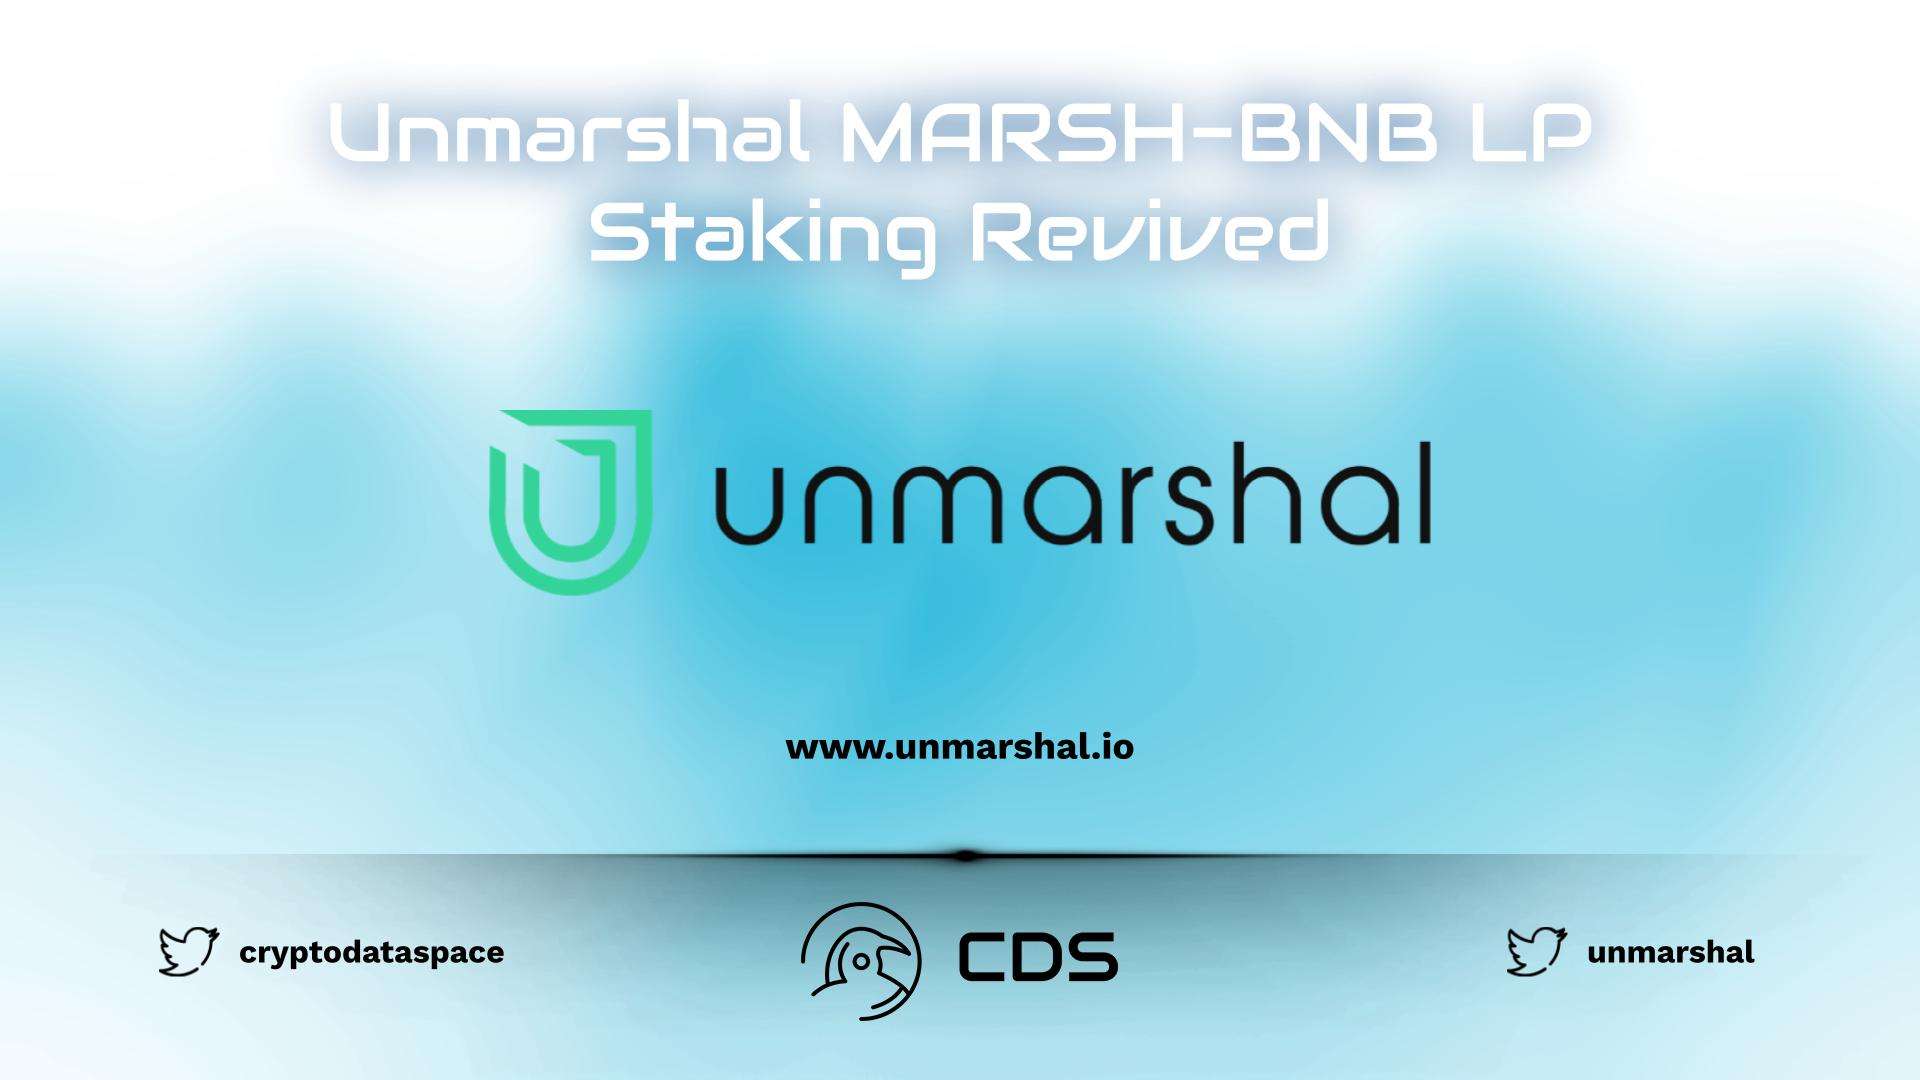 Unmarshal MARSH-BNB LP Staking Revived